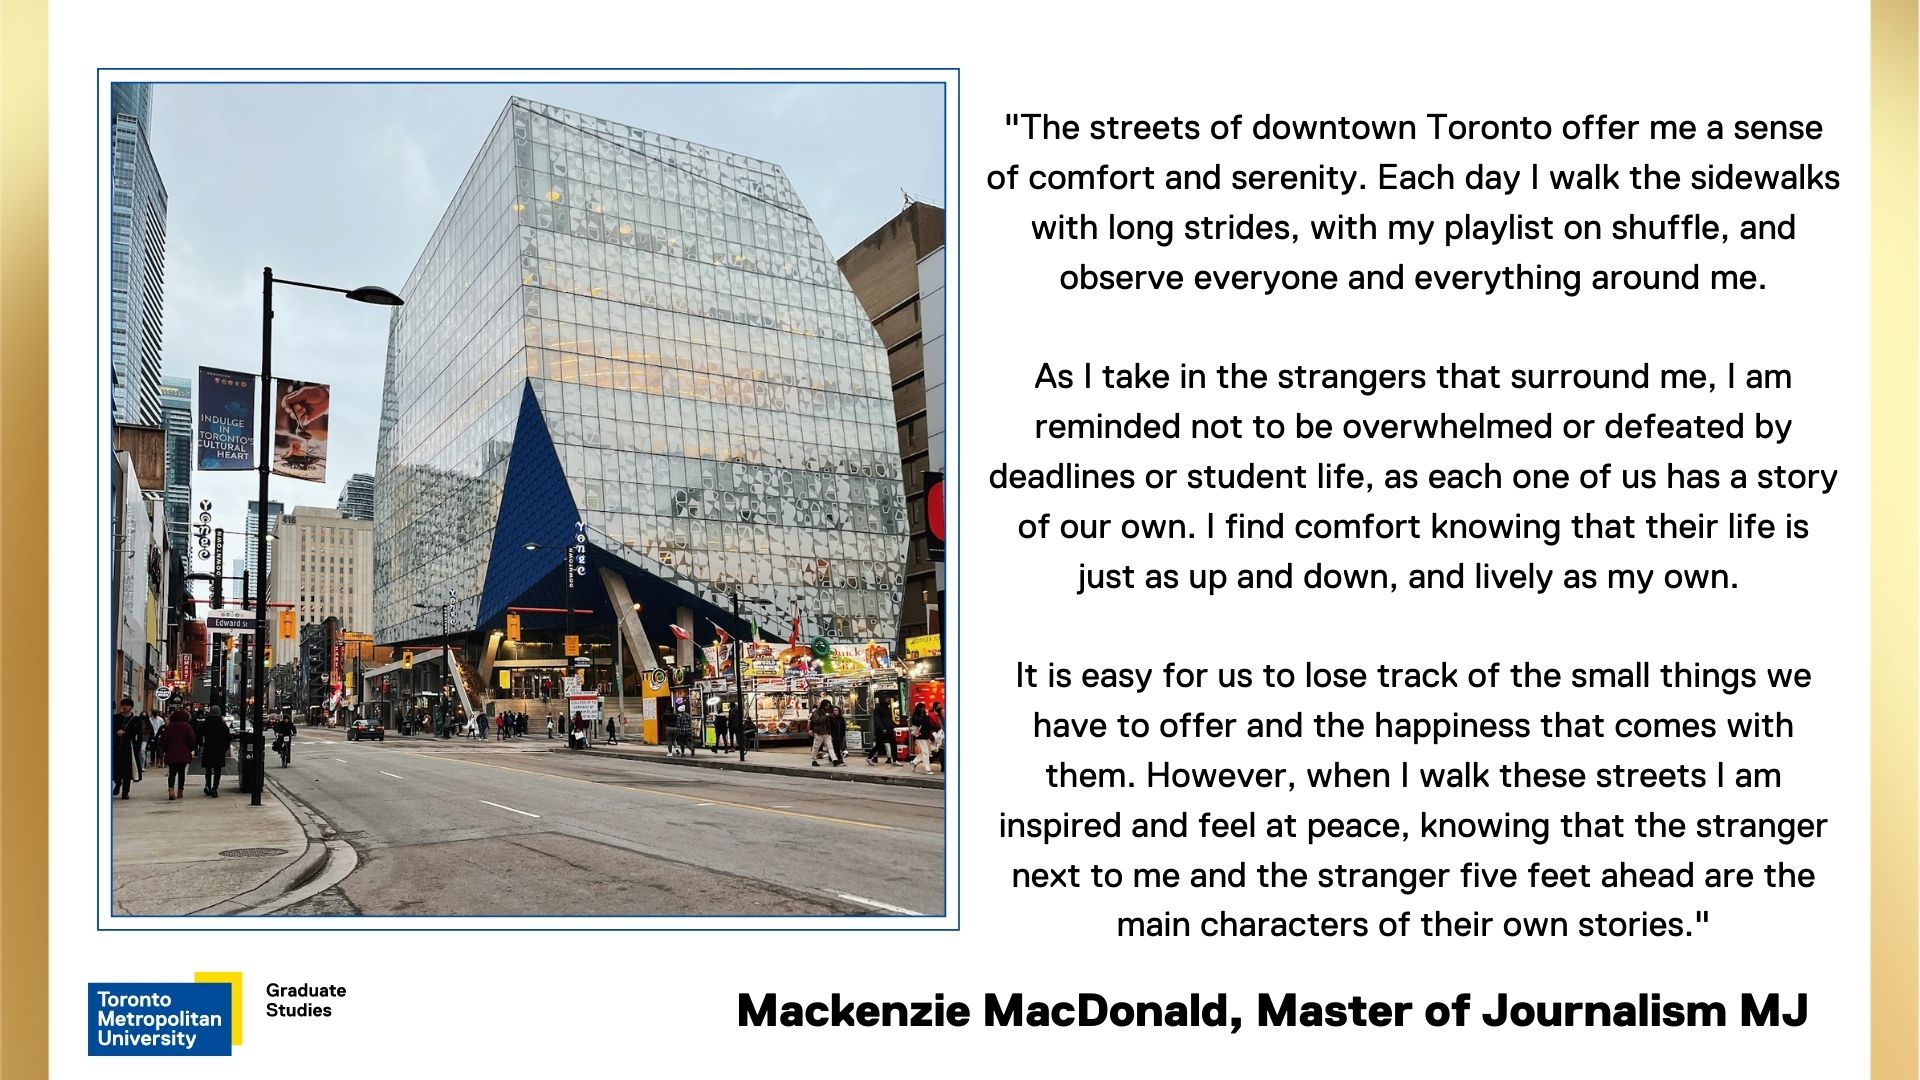 Mackenzie-MacDonald. View of SLC building taken on Gould street.